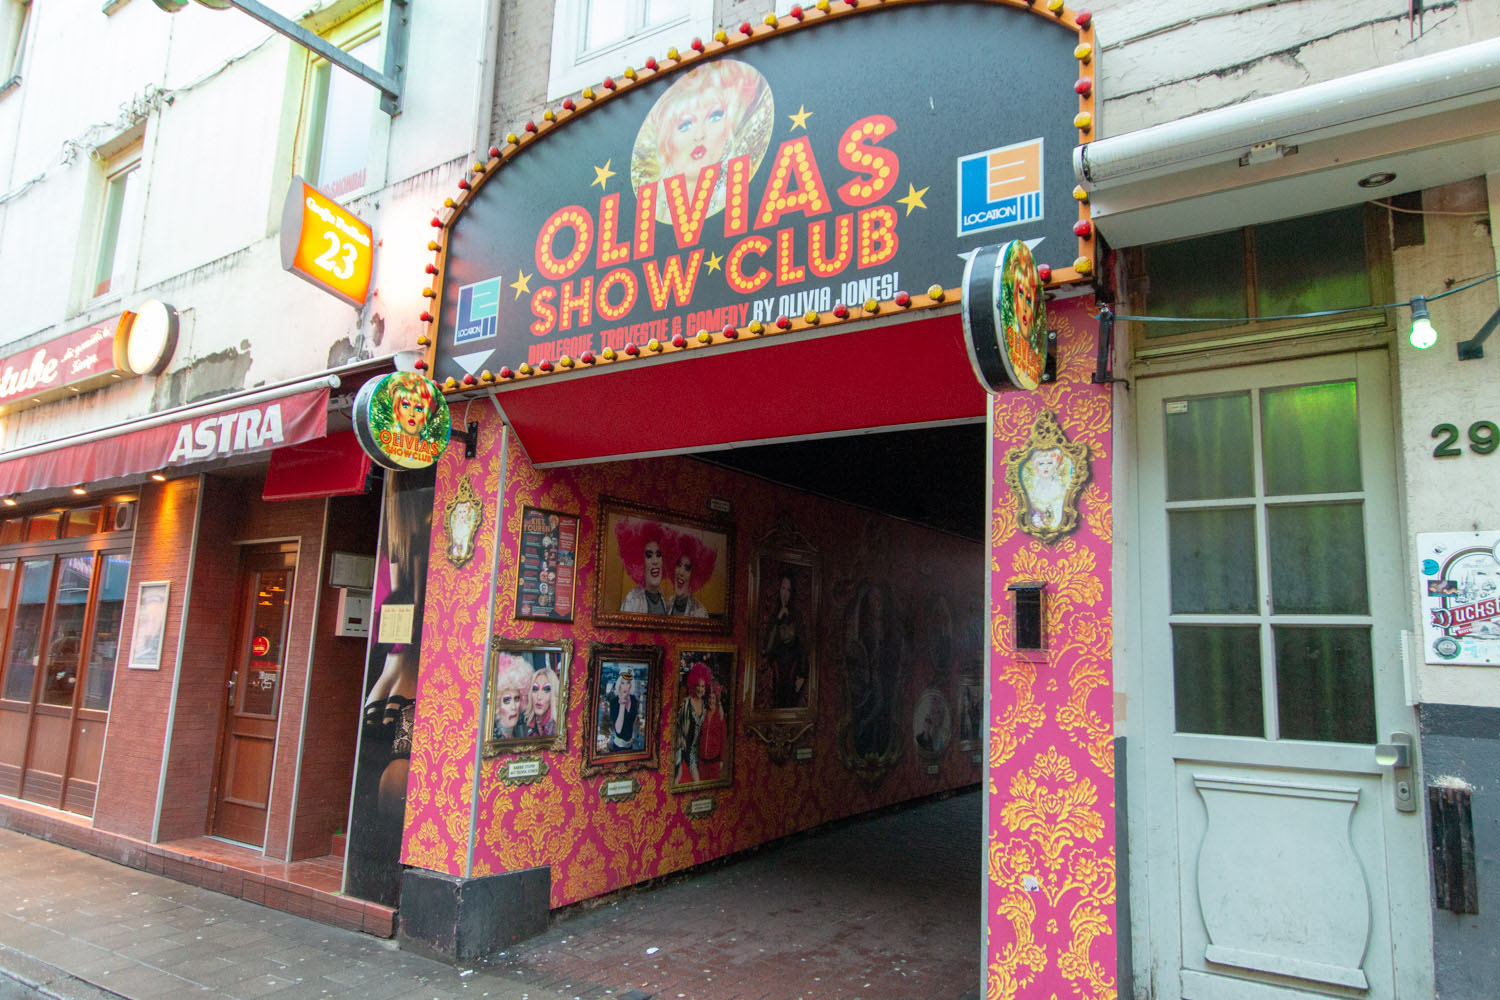 Olivia Jones' Bar